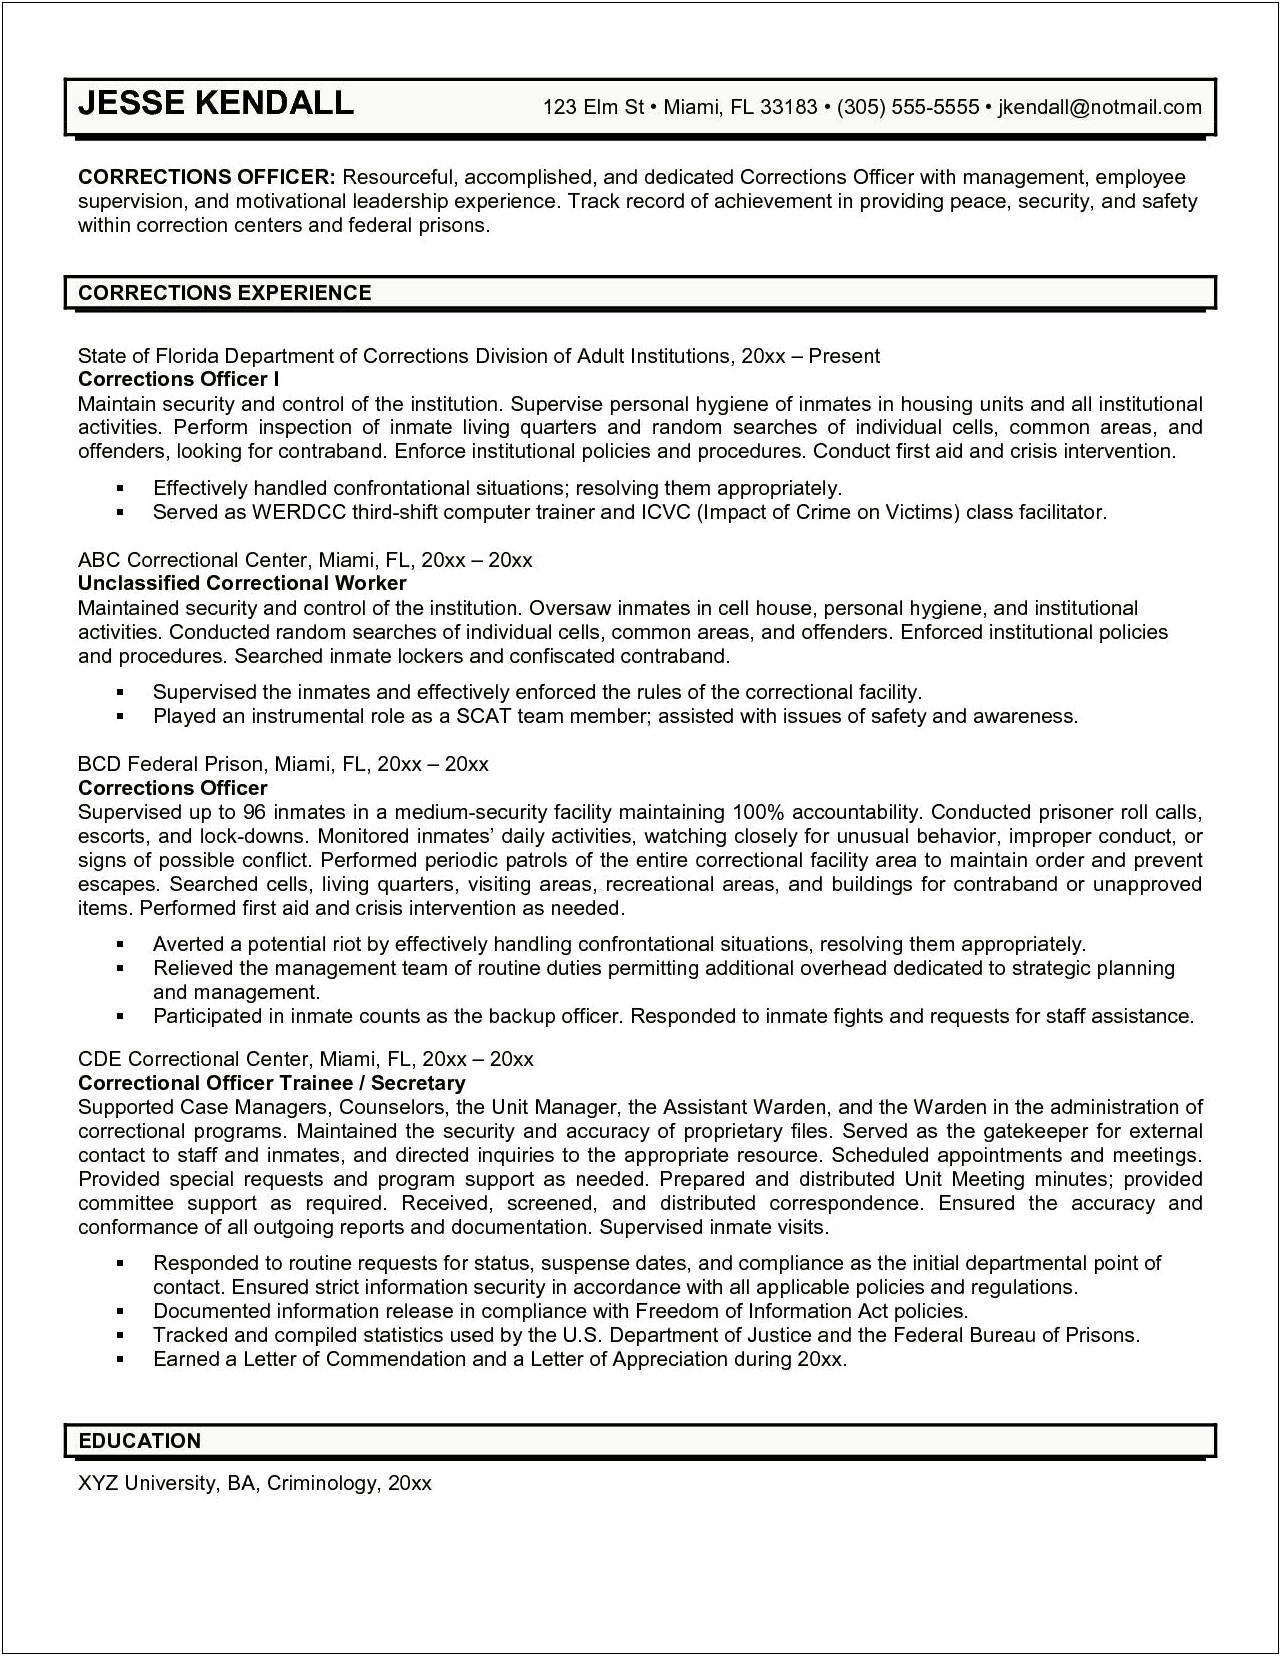 Resume Objective For A Probation Officer